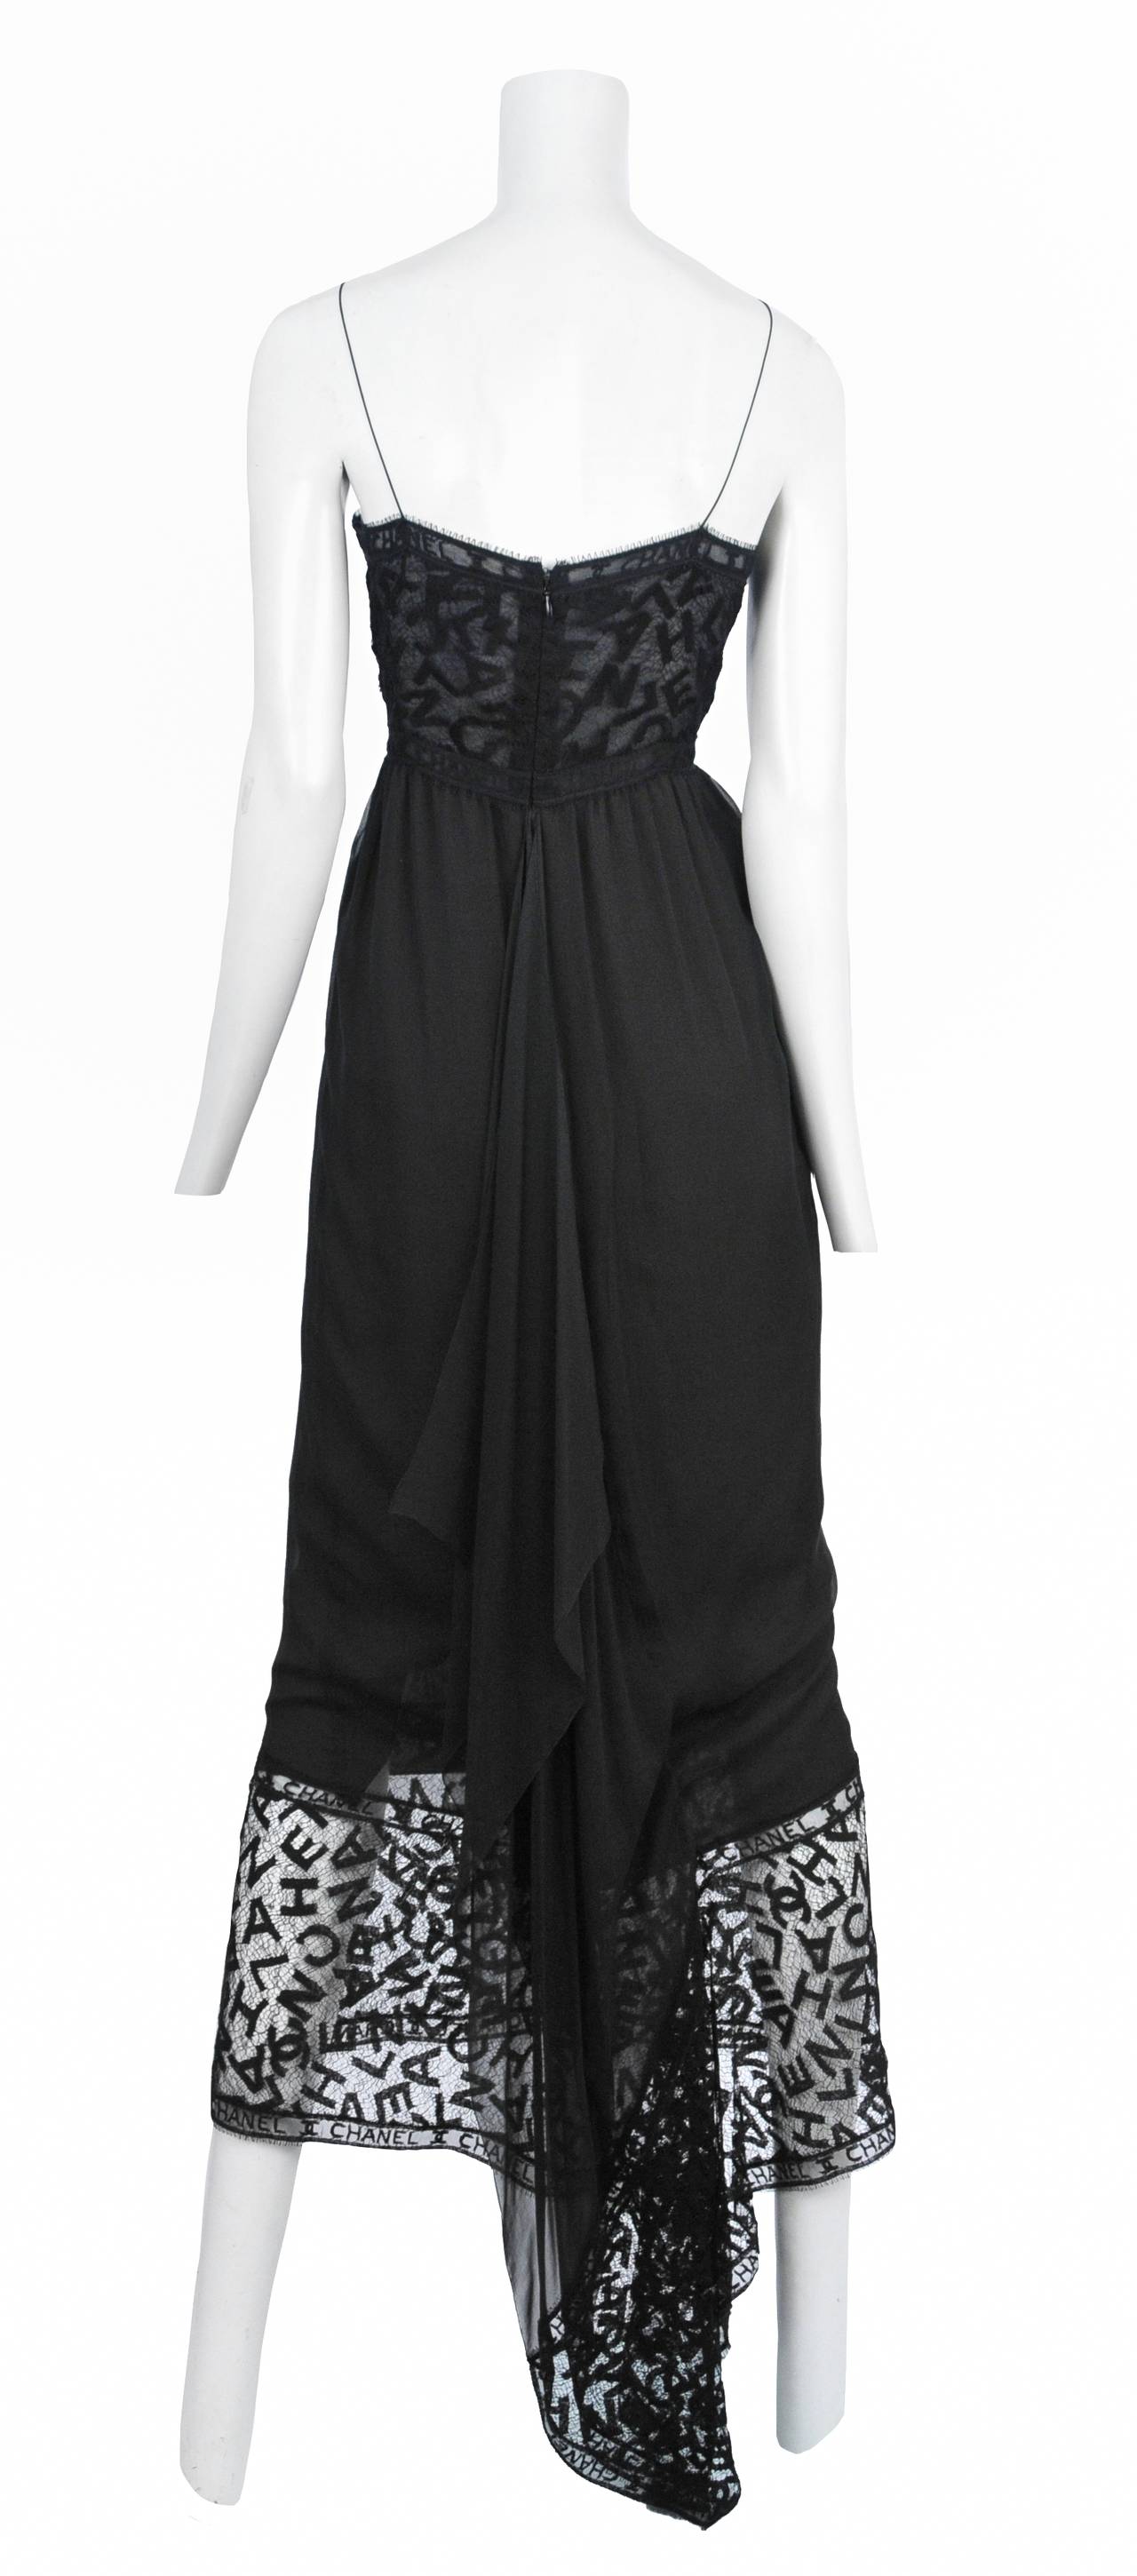 Vintage Chanel black lace chiffon empire dress with slight train and spaghetti straps.